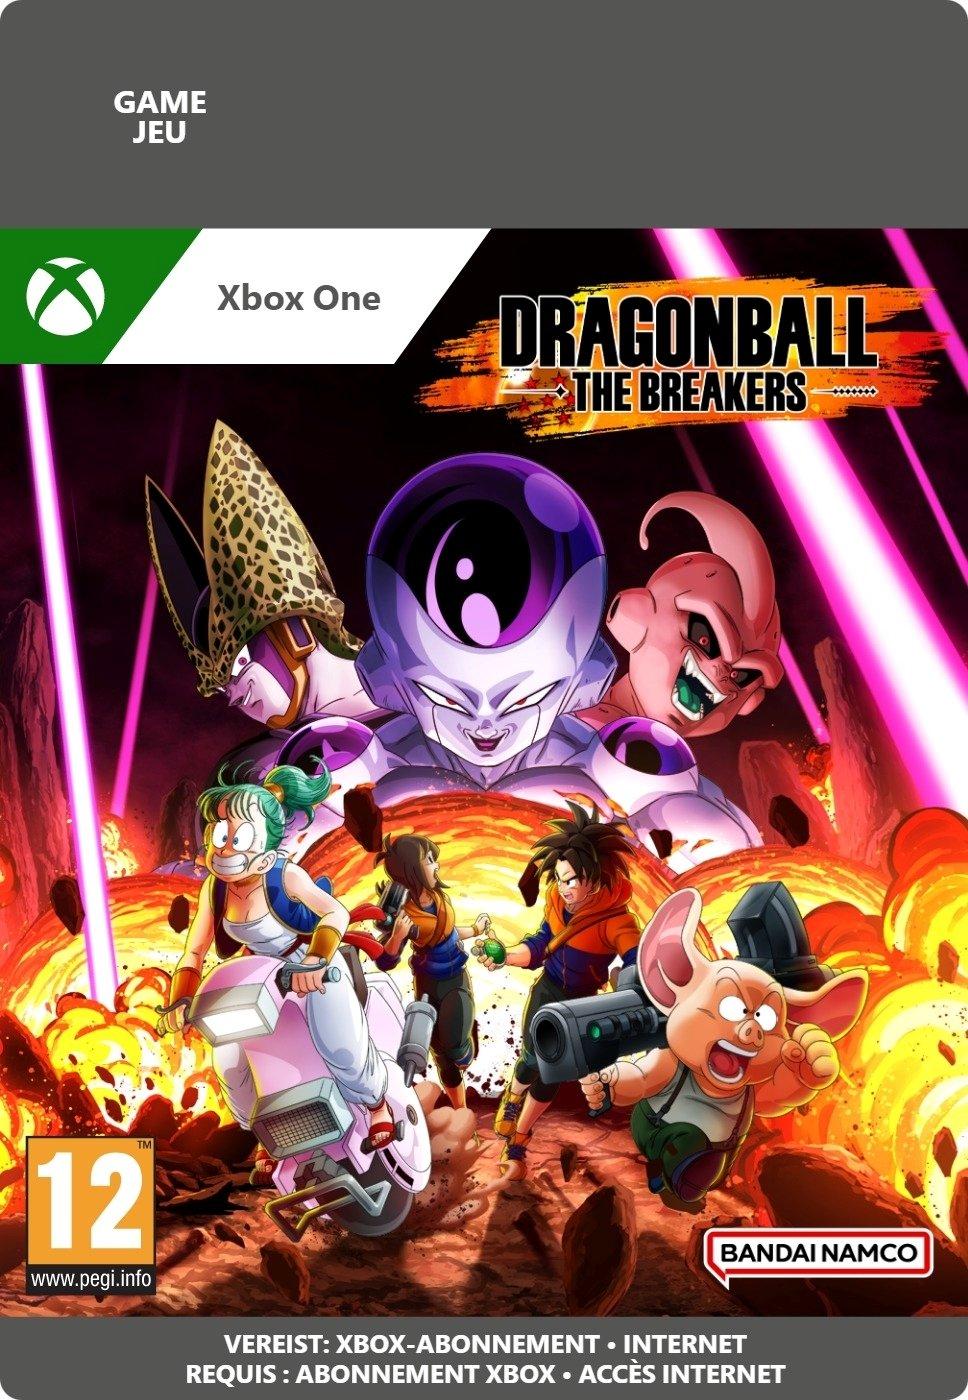 Dragon Ball: The Breakers - Standard Edition - Xbox One - Game | G3Q-01425 (e58b266b-a0cb-b24a-9324-1cbe4cca6a6b)